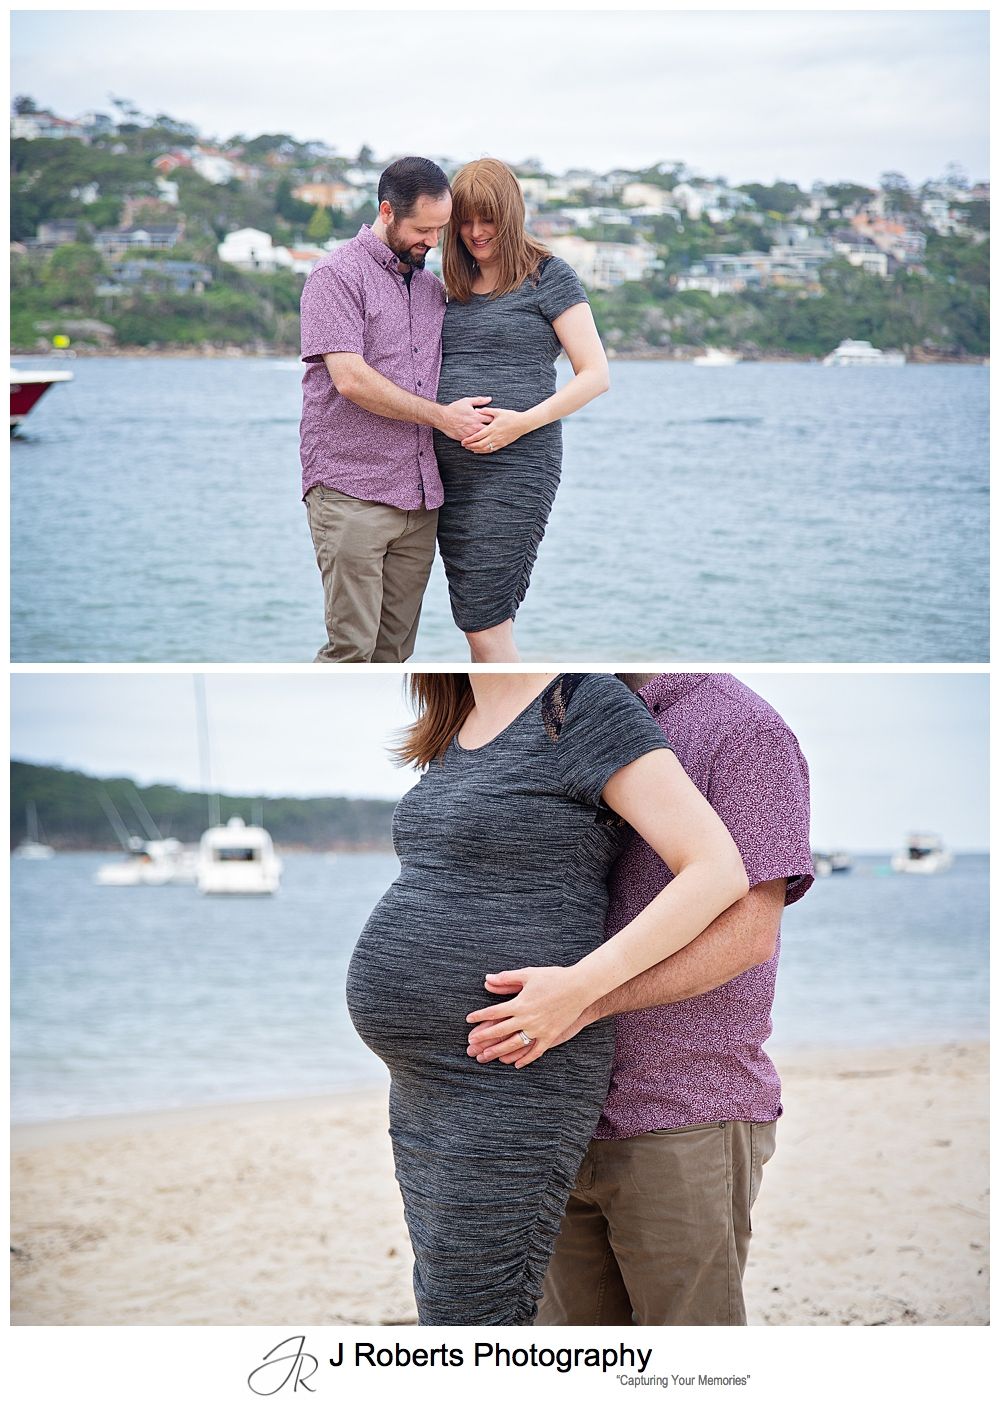 Pregnancy Portrait Photography Sydney at Chinamans Beach Mosman